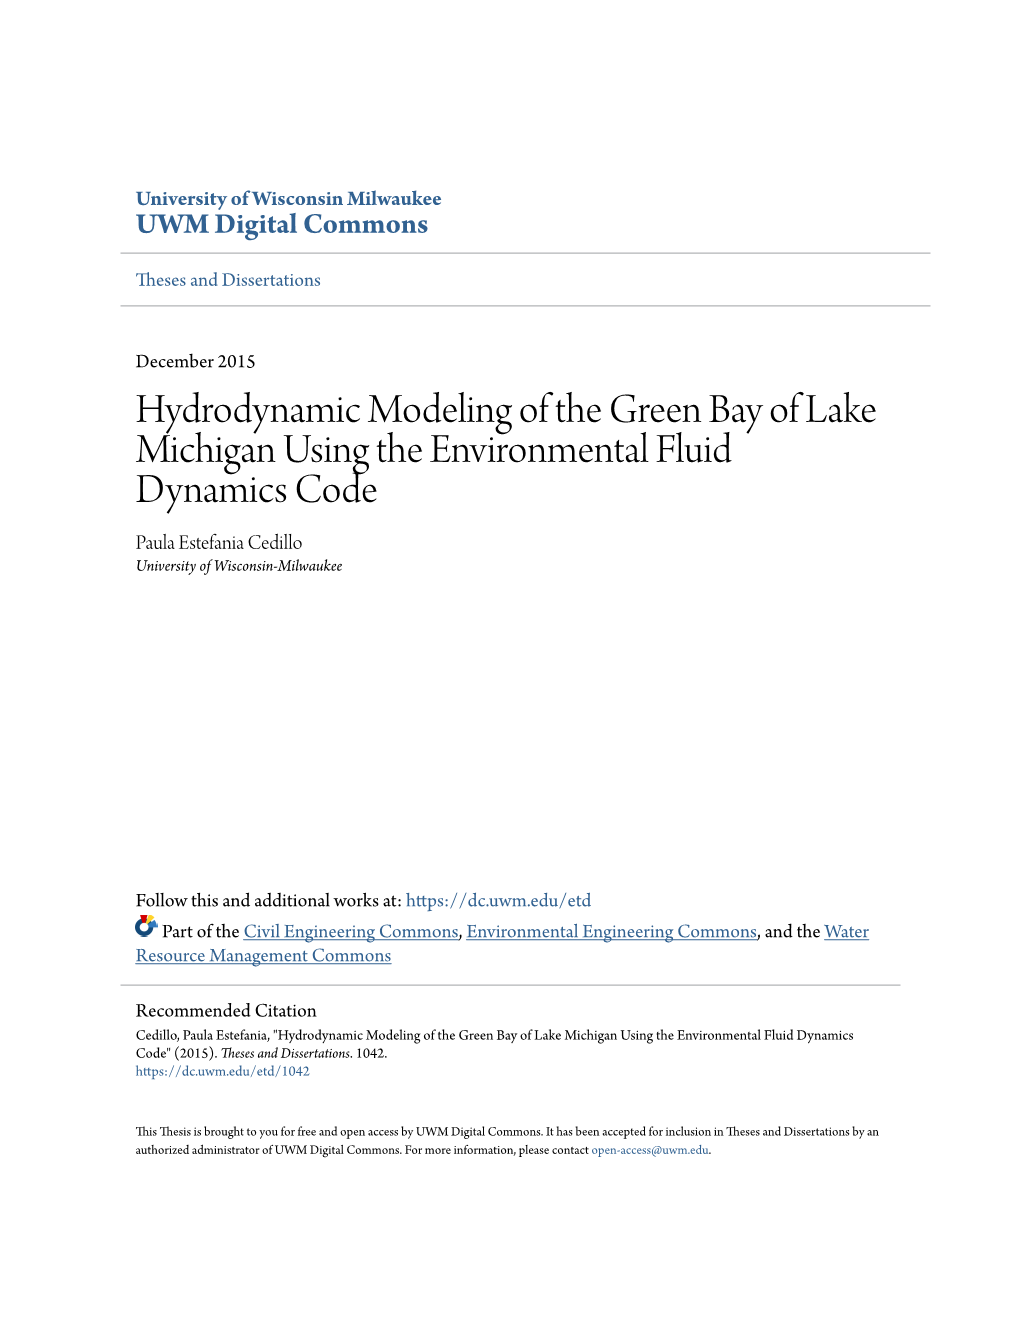 Hydrodynamic Modeling of the Green Bay of Lake Michigan Using the Environmental Fluid Dynamics Code Paula Estefania Cedillo University of Wisconsin-Milwaukee